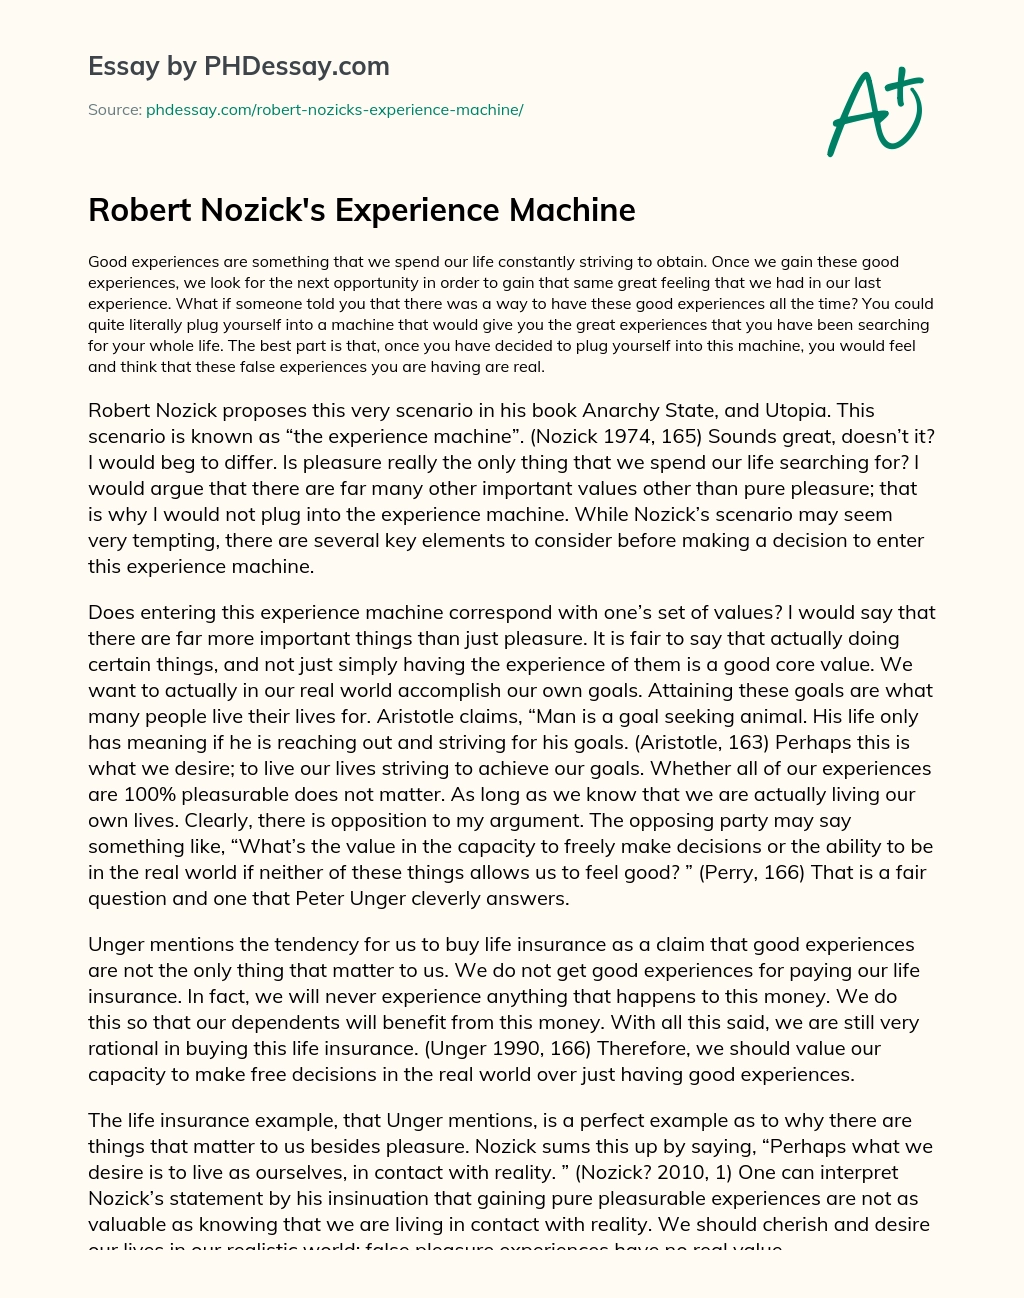 Robert Nozick’s Experience Machine essay